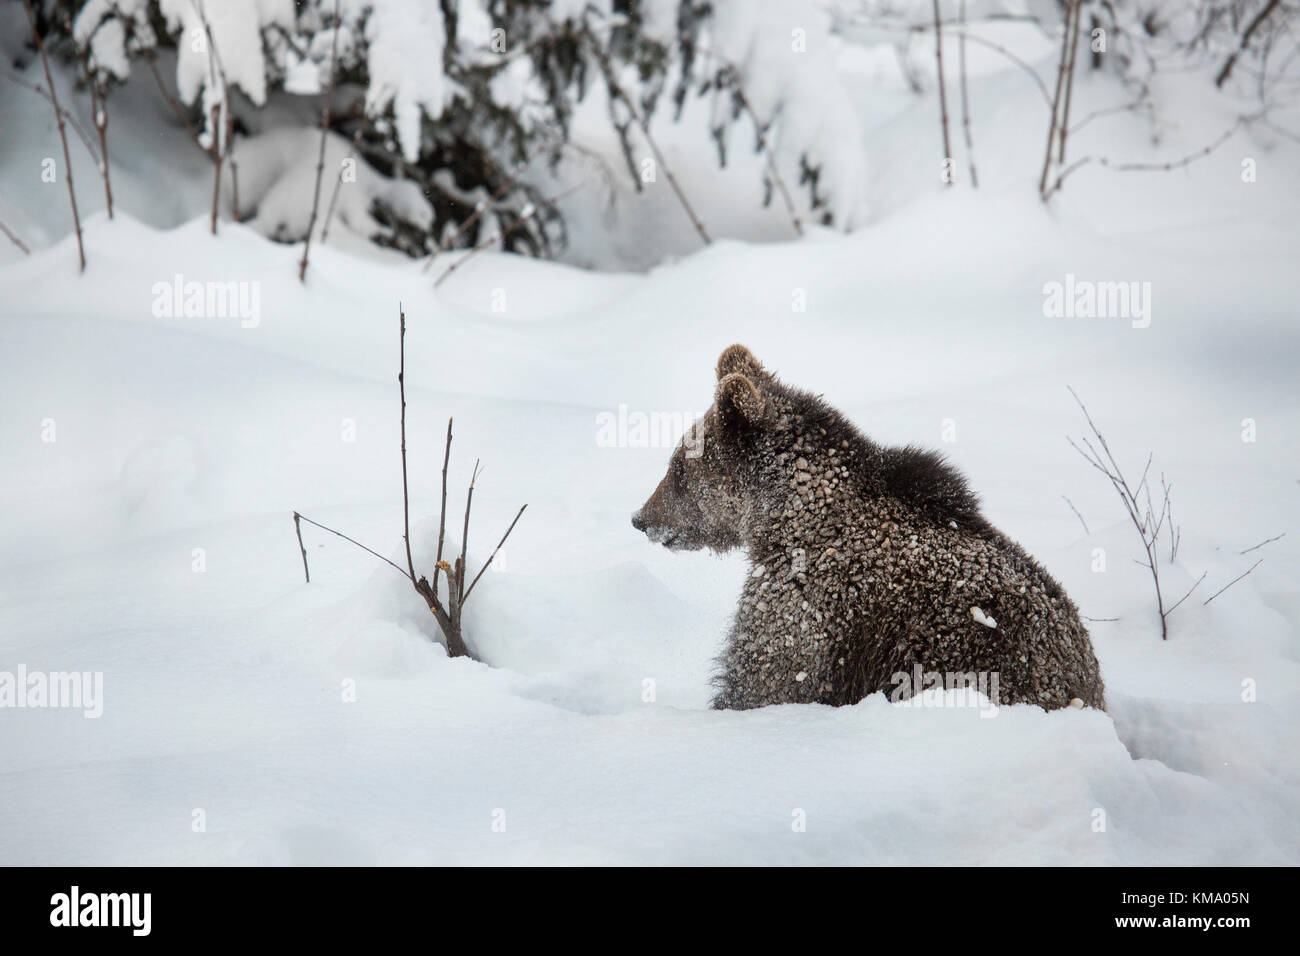 One-year old brown bear cub (Ursus arctos arctos) sitting in deep snow in forest in winter Stock Photo